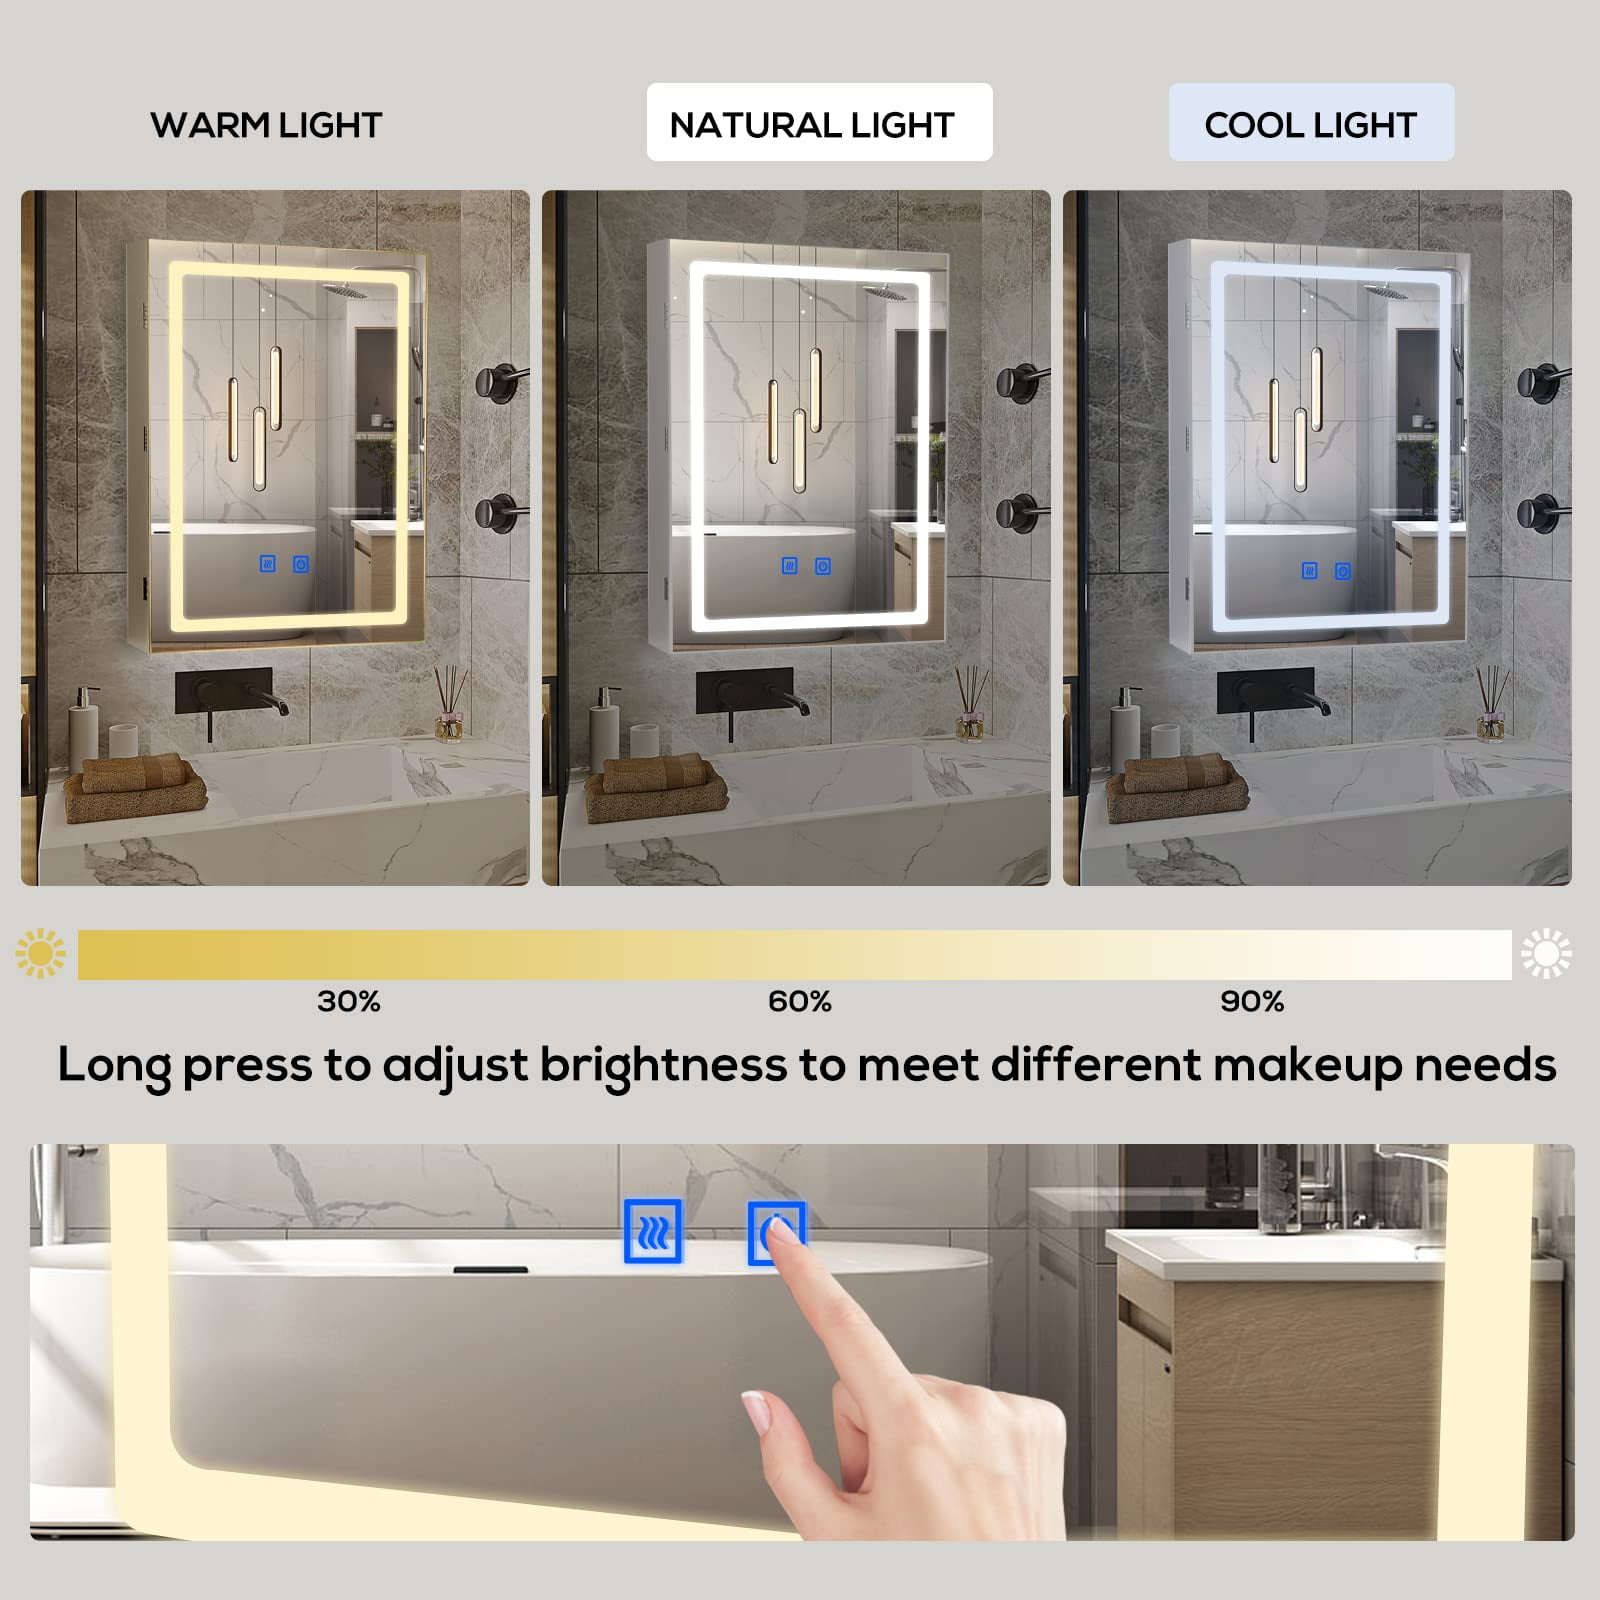 What should LED bathroom lighting meet?